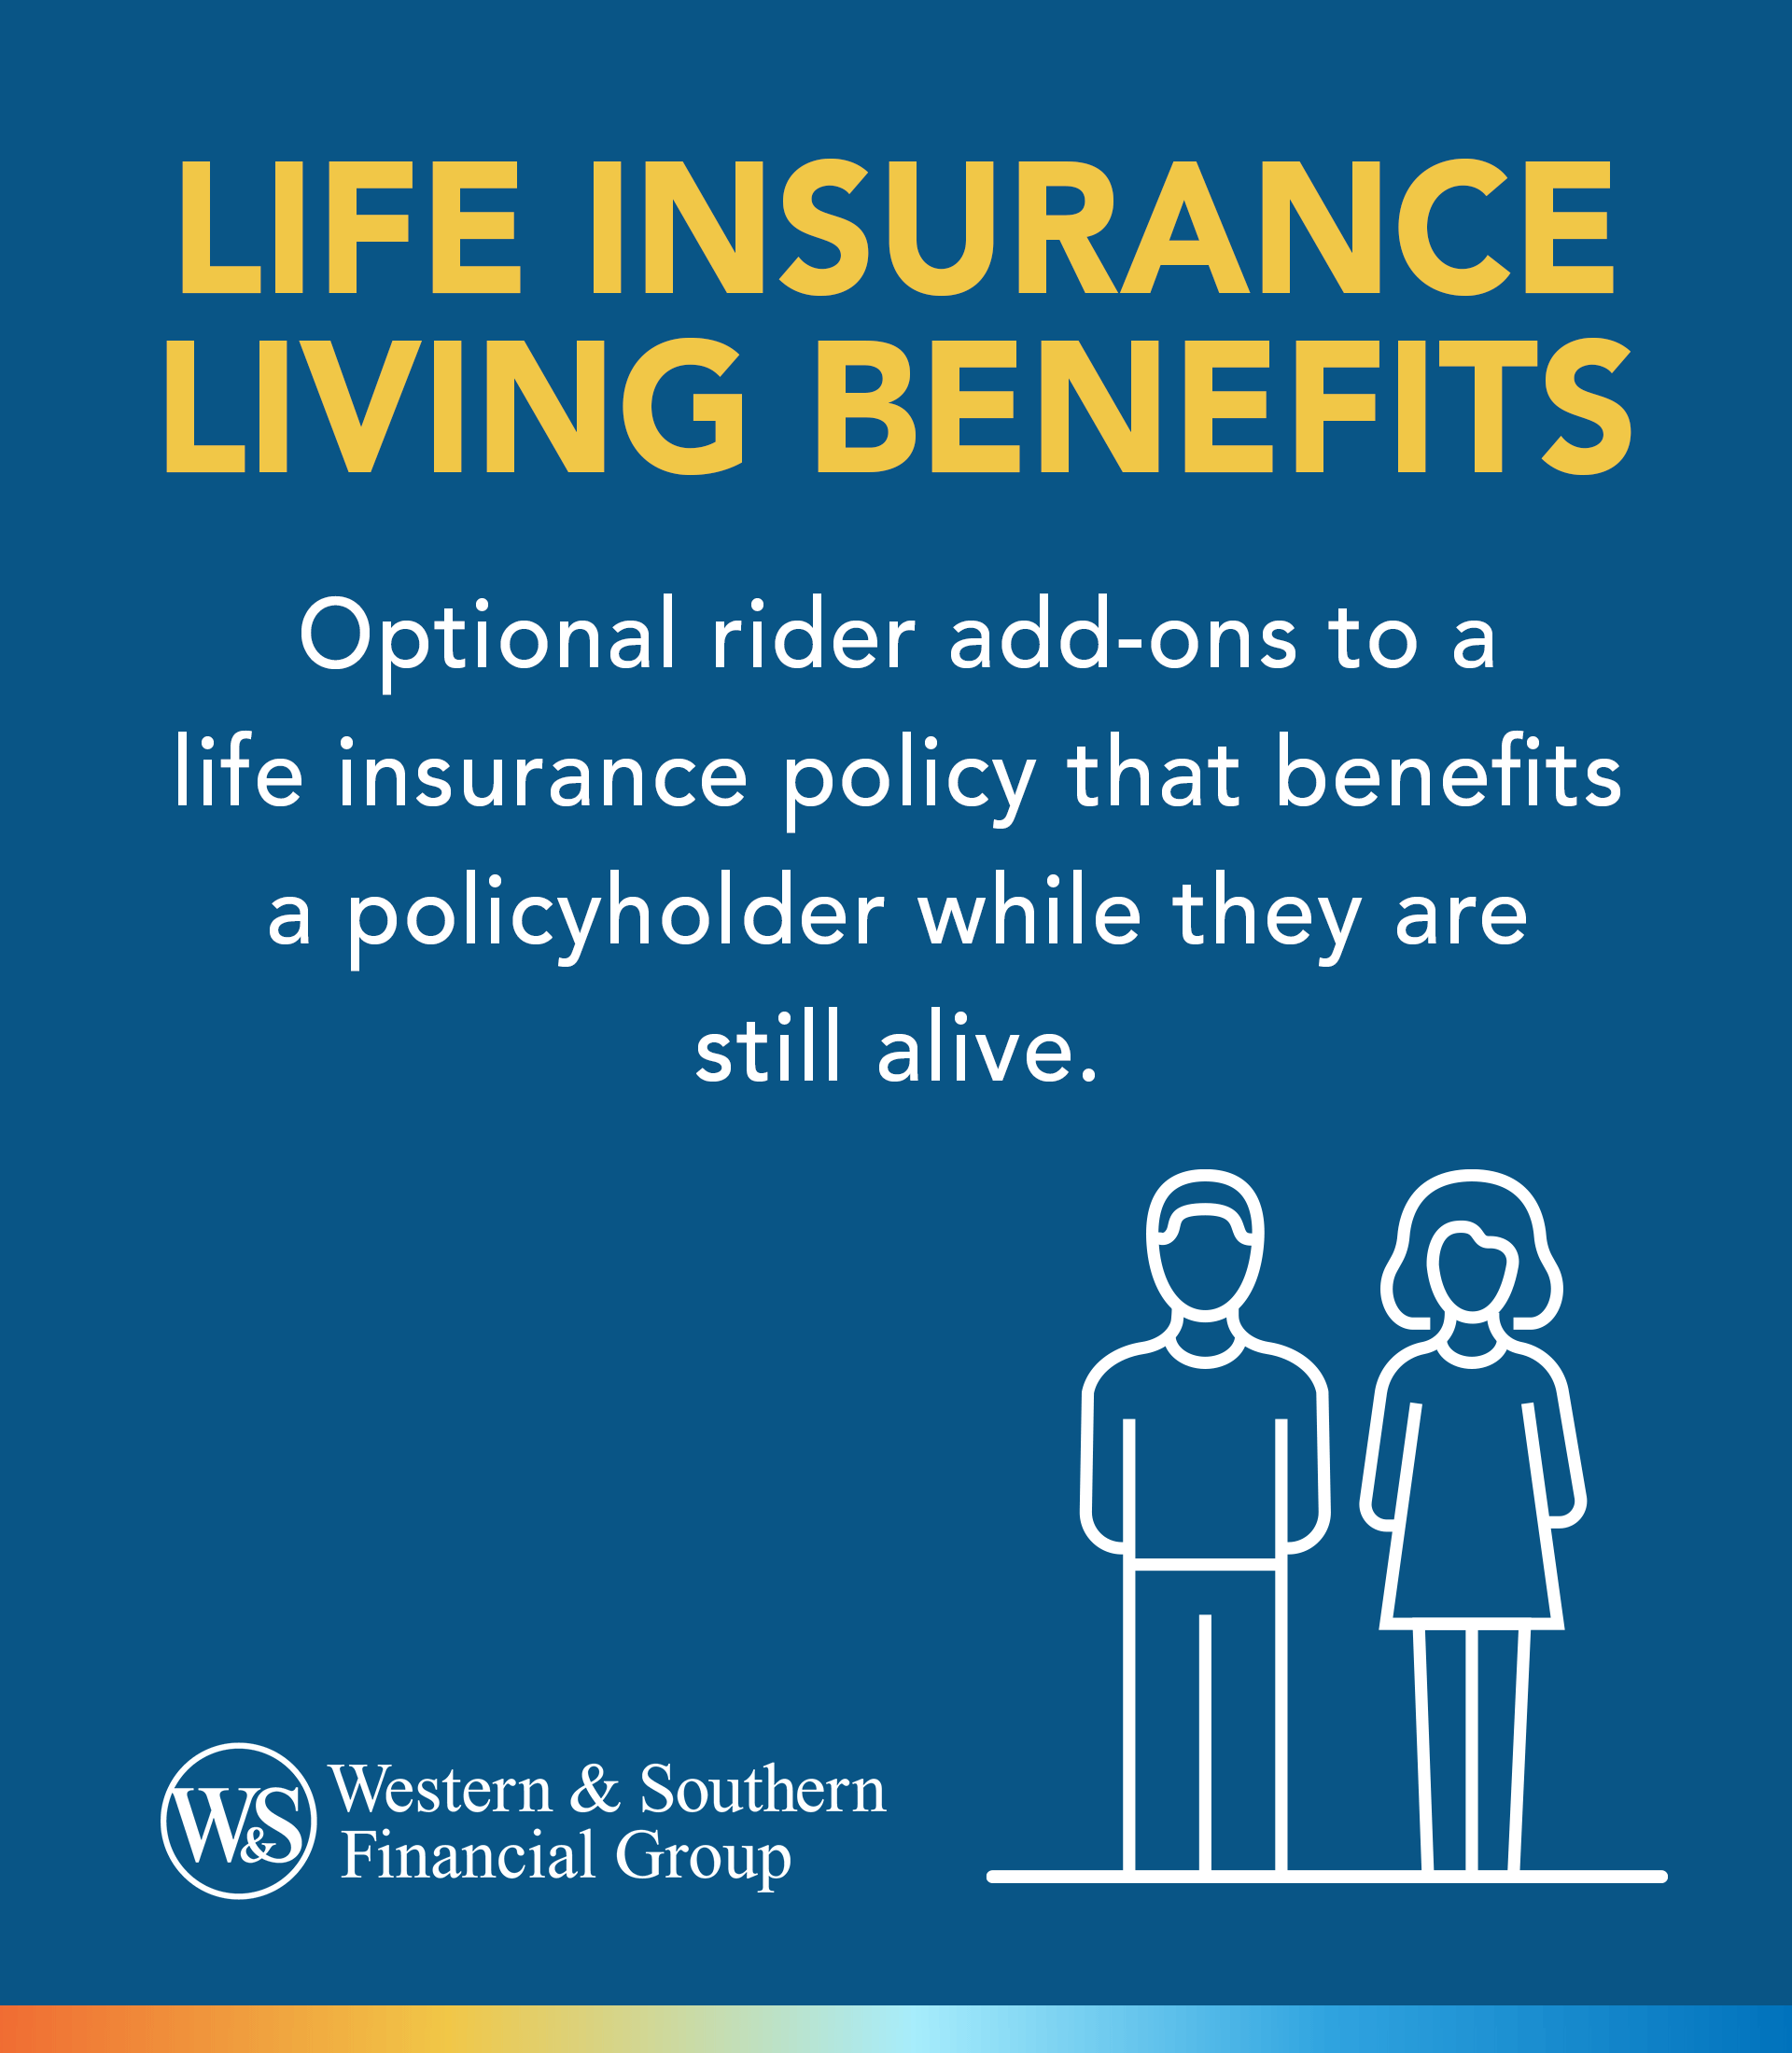 Life Insurance Living Benefits definition